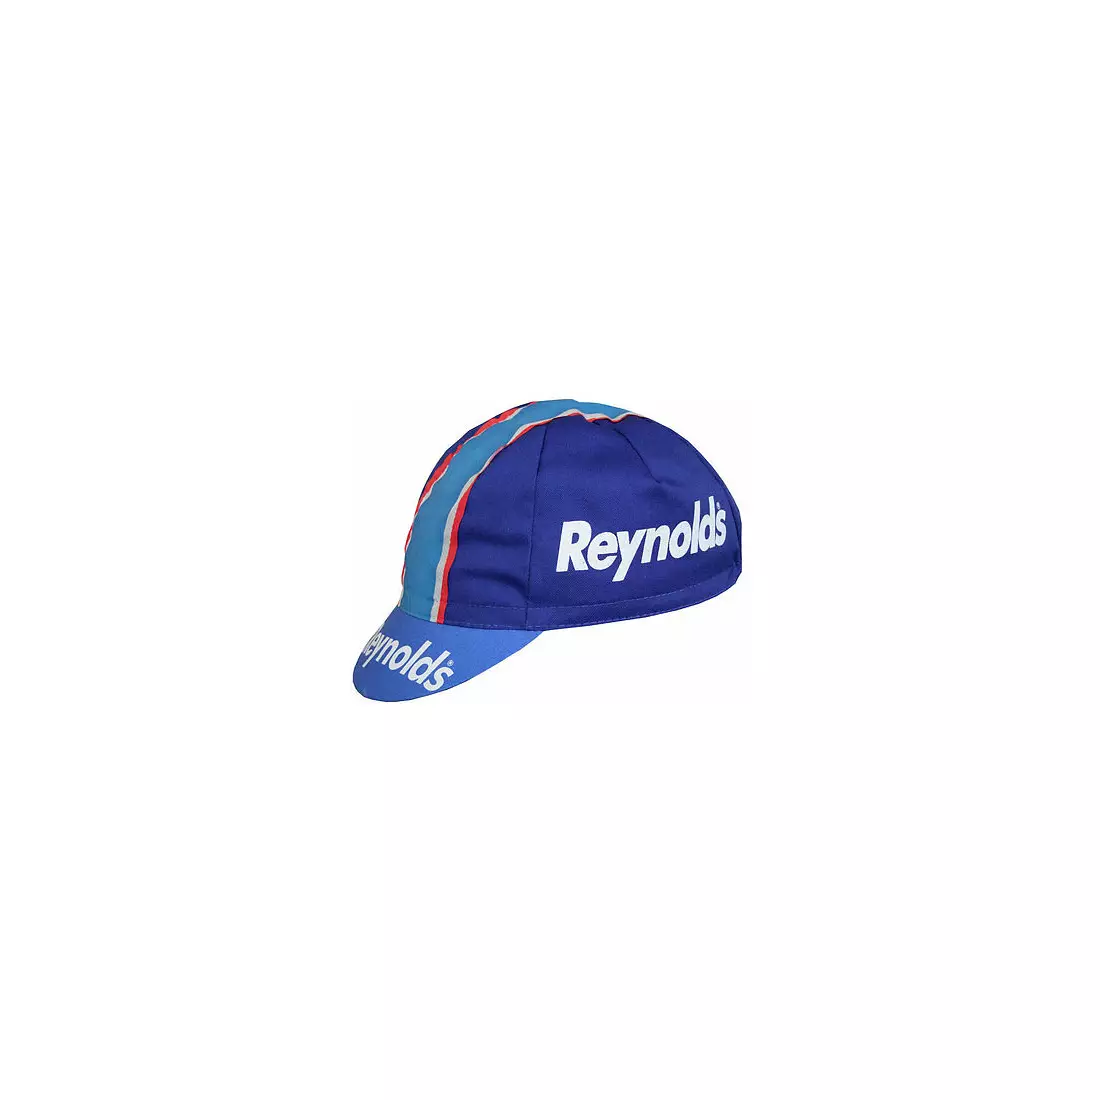 Apis Profi REYNOLDS cycling cap, blue